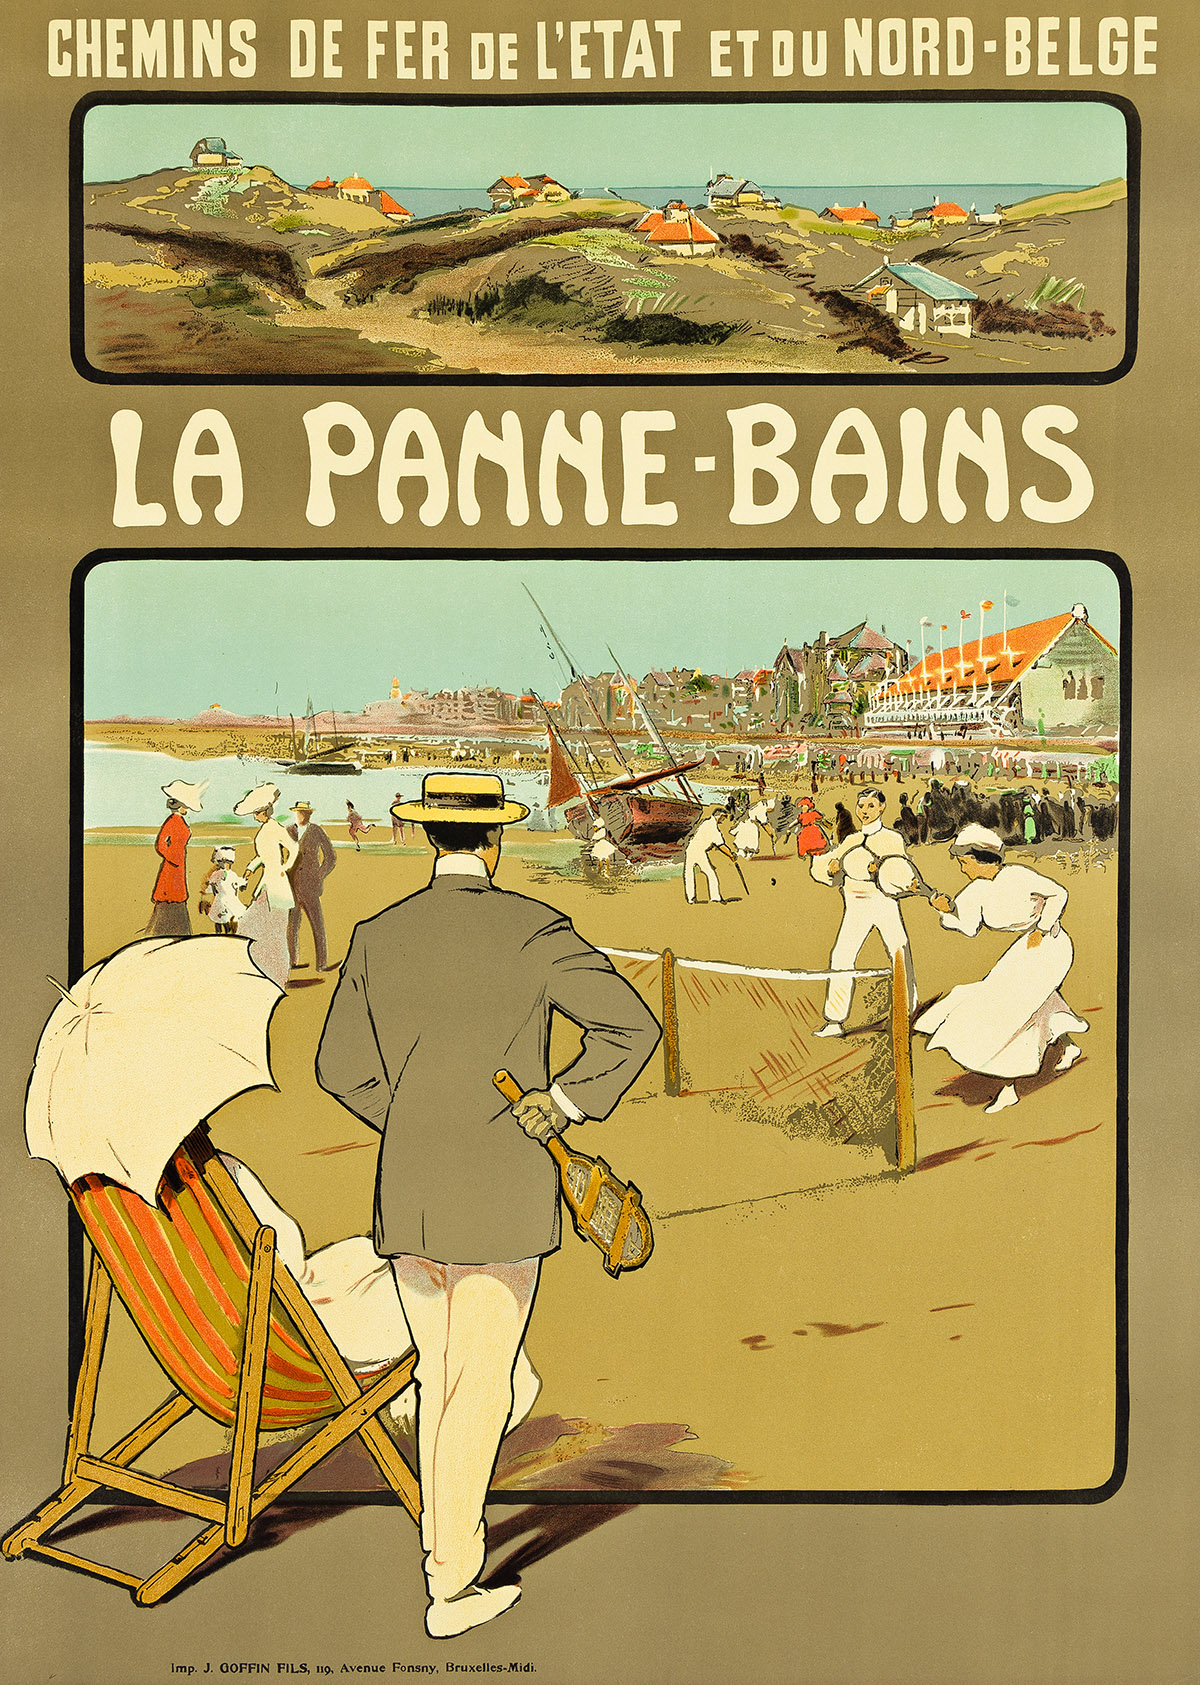 DESIGNER UNKNOWN. LA PANNE - BAINS. 1912. 34½x24¼ inches, 87½x61½ cm. J. Goffin Fils, Brussels.